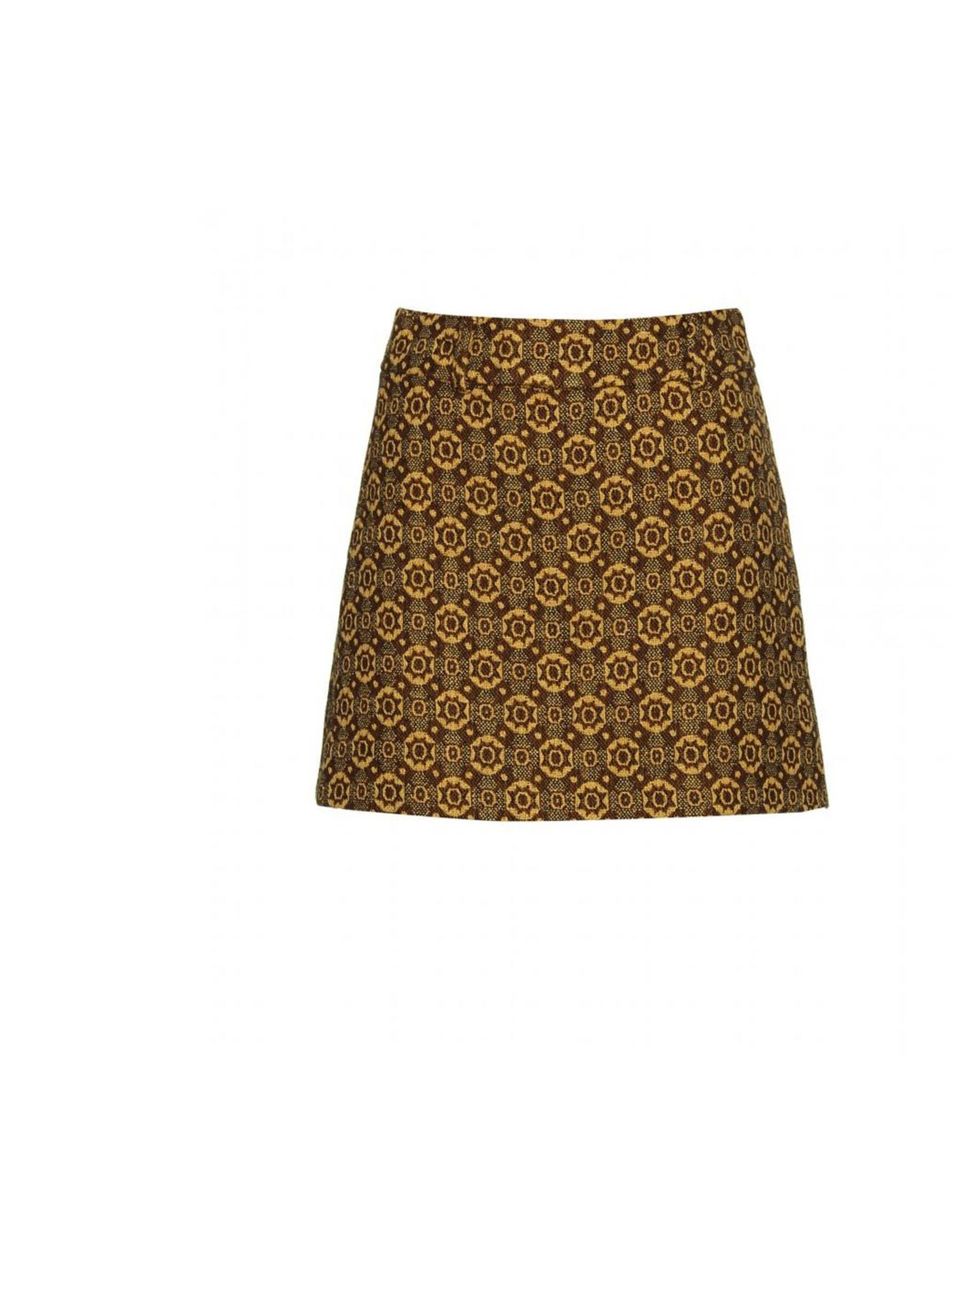 <p>Miu Miu jacquard mini skirt, £420, at <a href="http://www.mytheresa.com/uk_en/jacquard-woven-mini-skirt-165861.html">mytheresa.com</a></p>